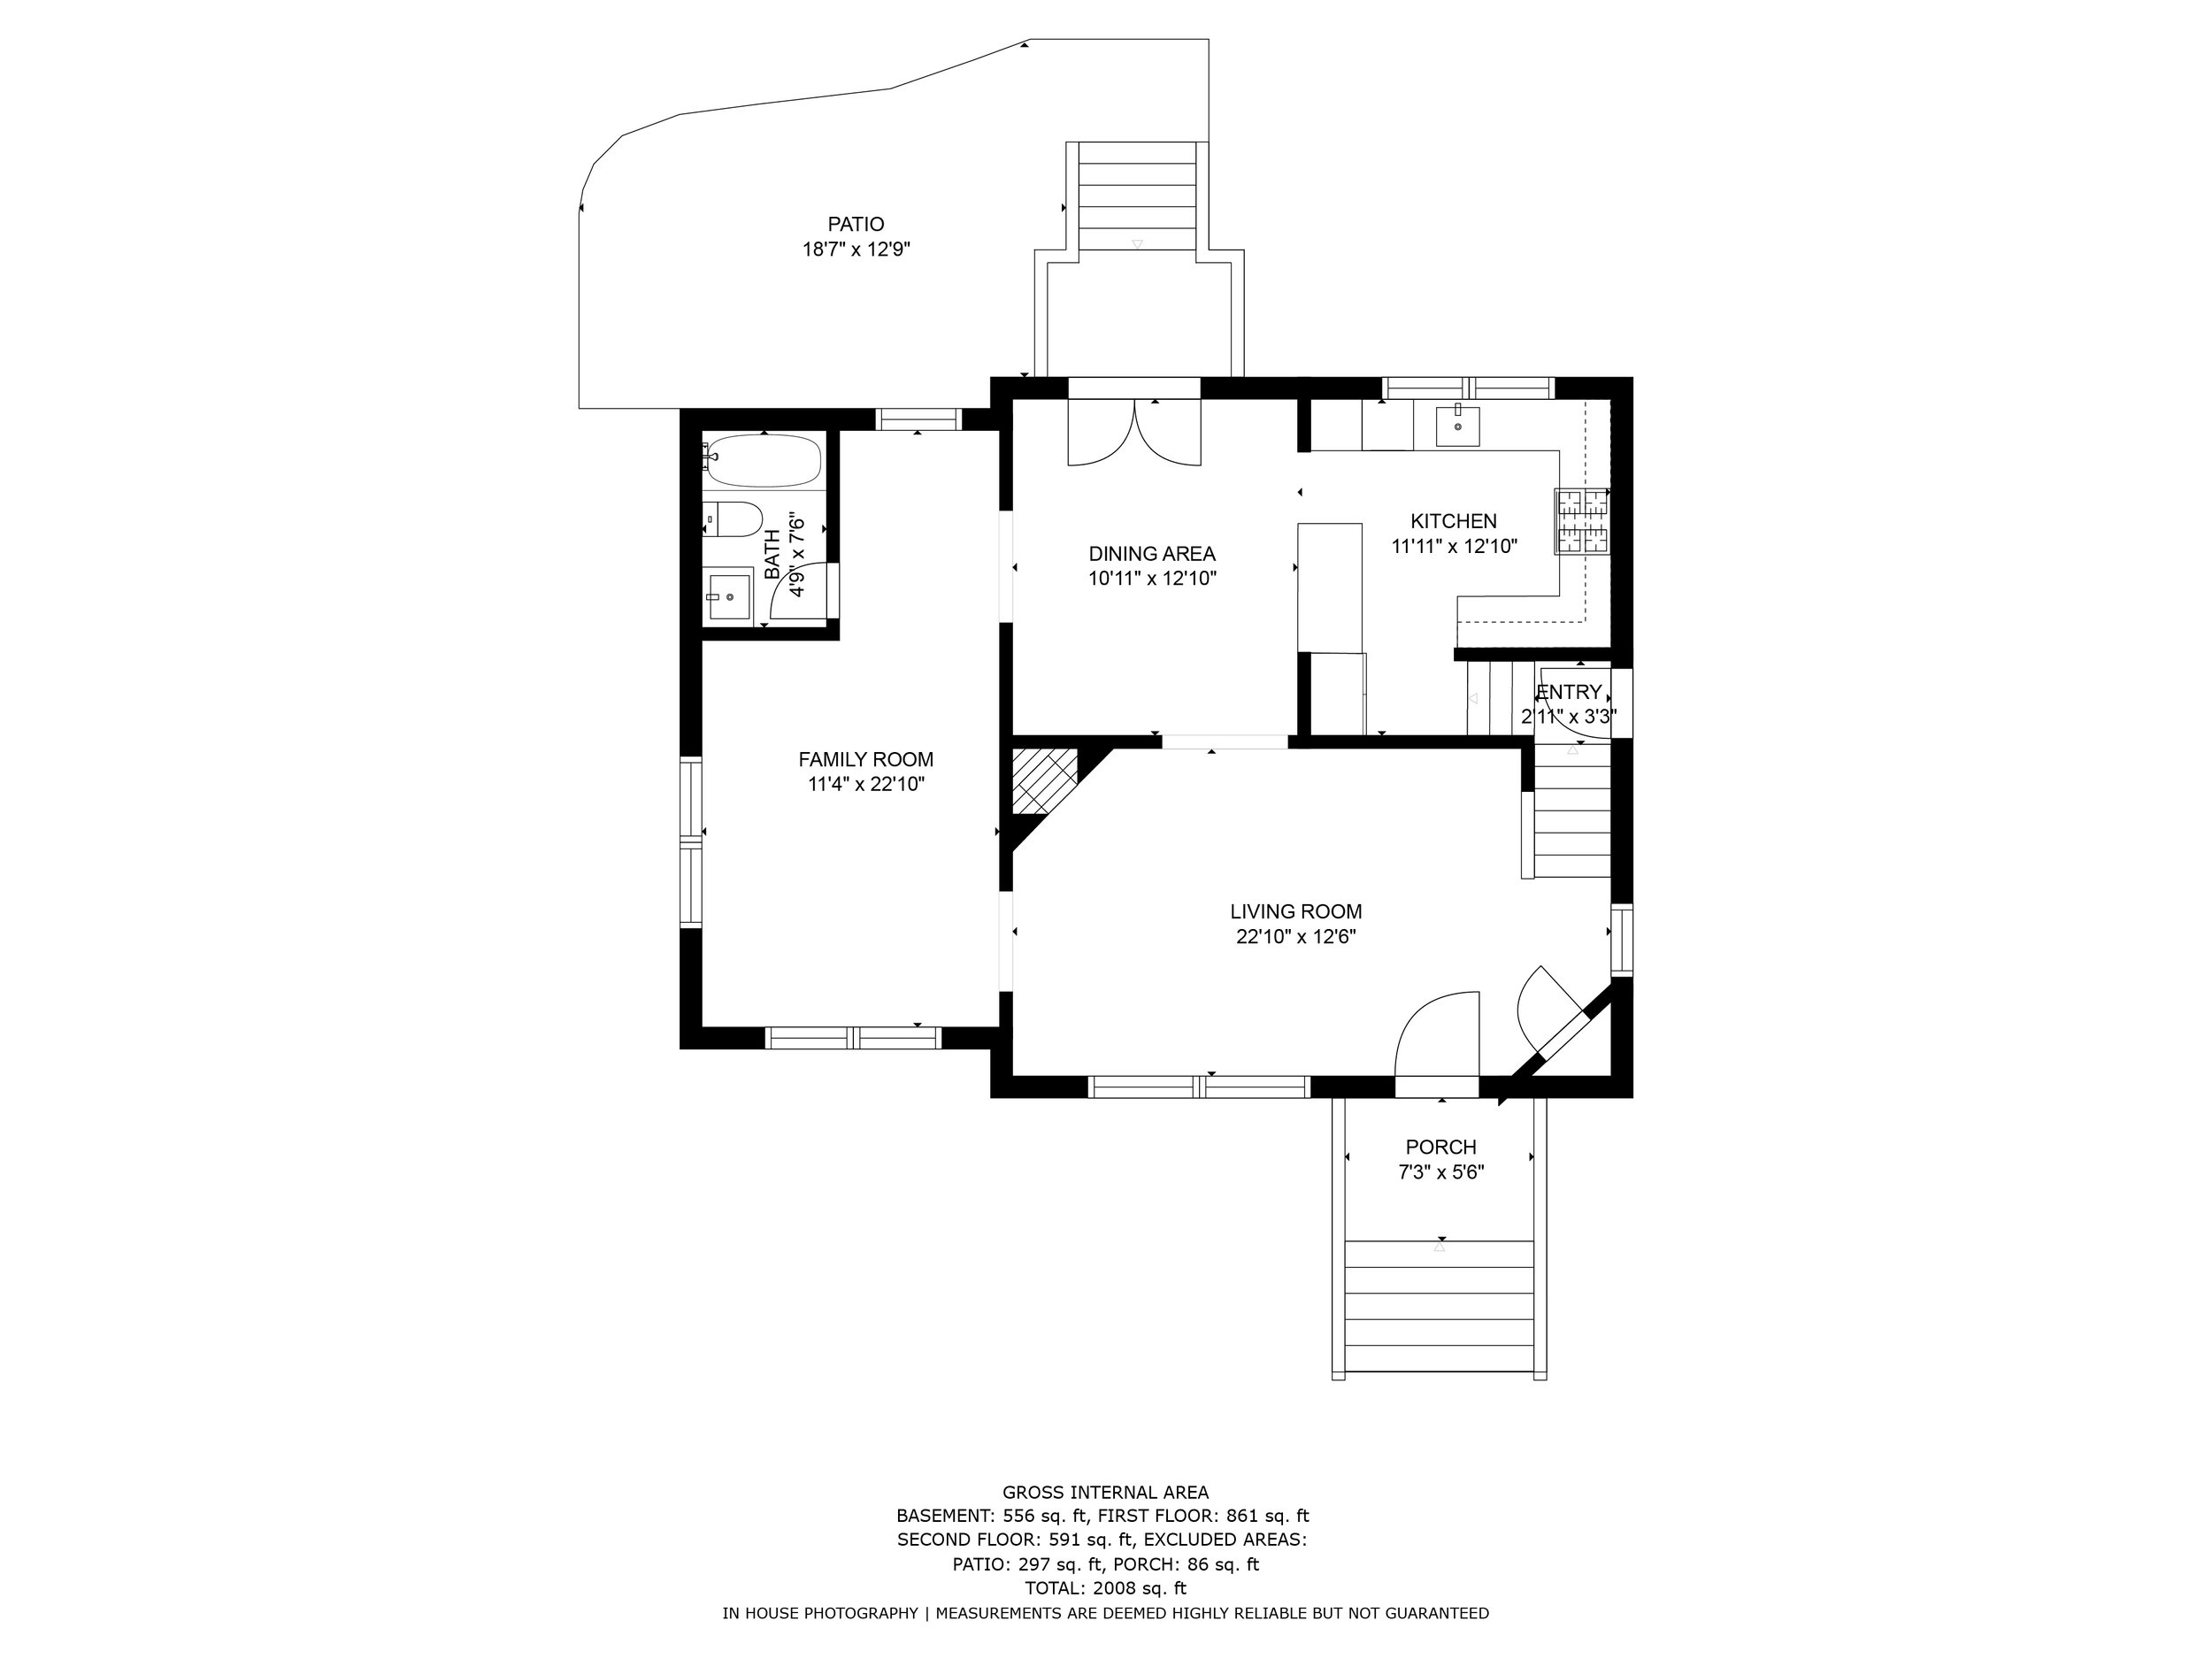 3-333 Meadowbrook floor plan first floor.jpg